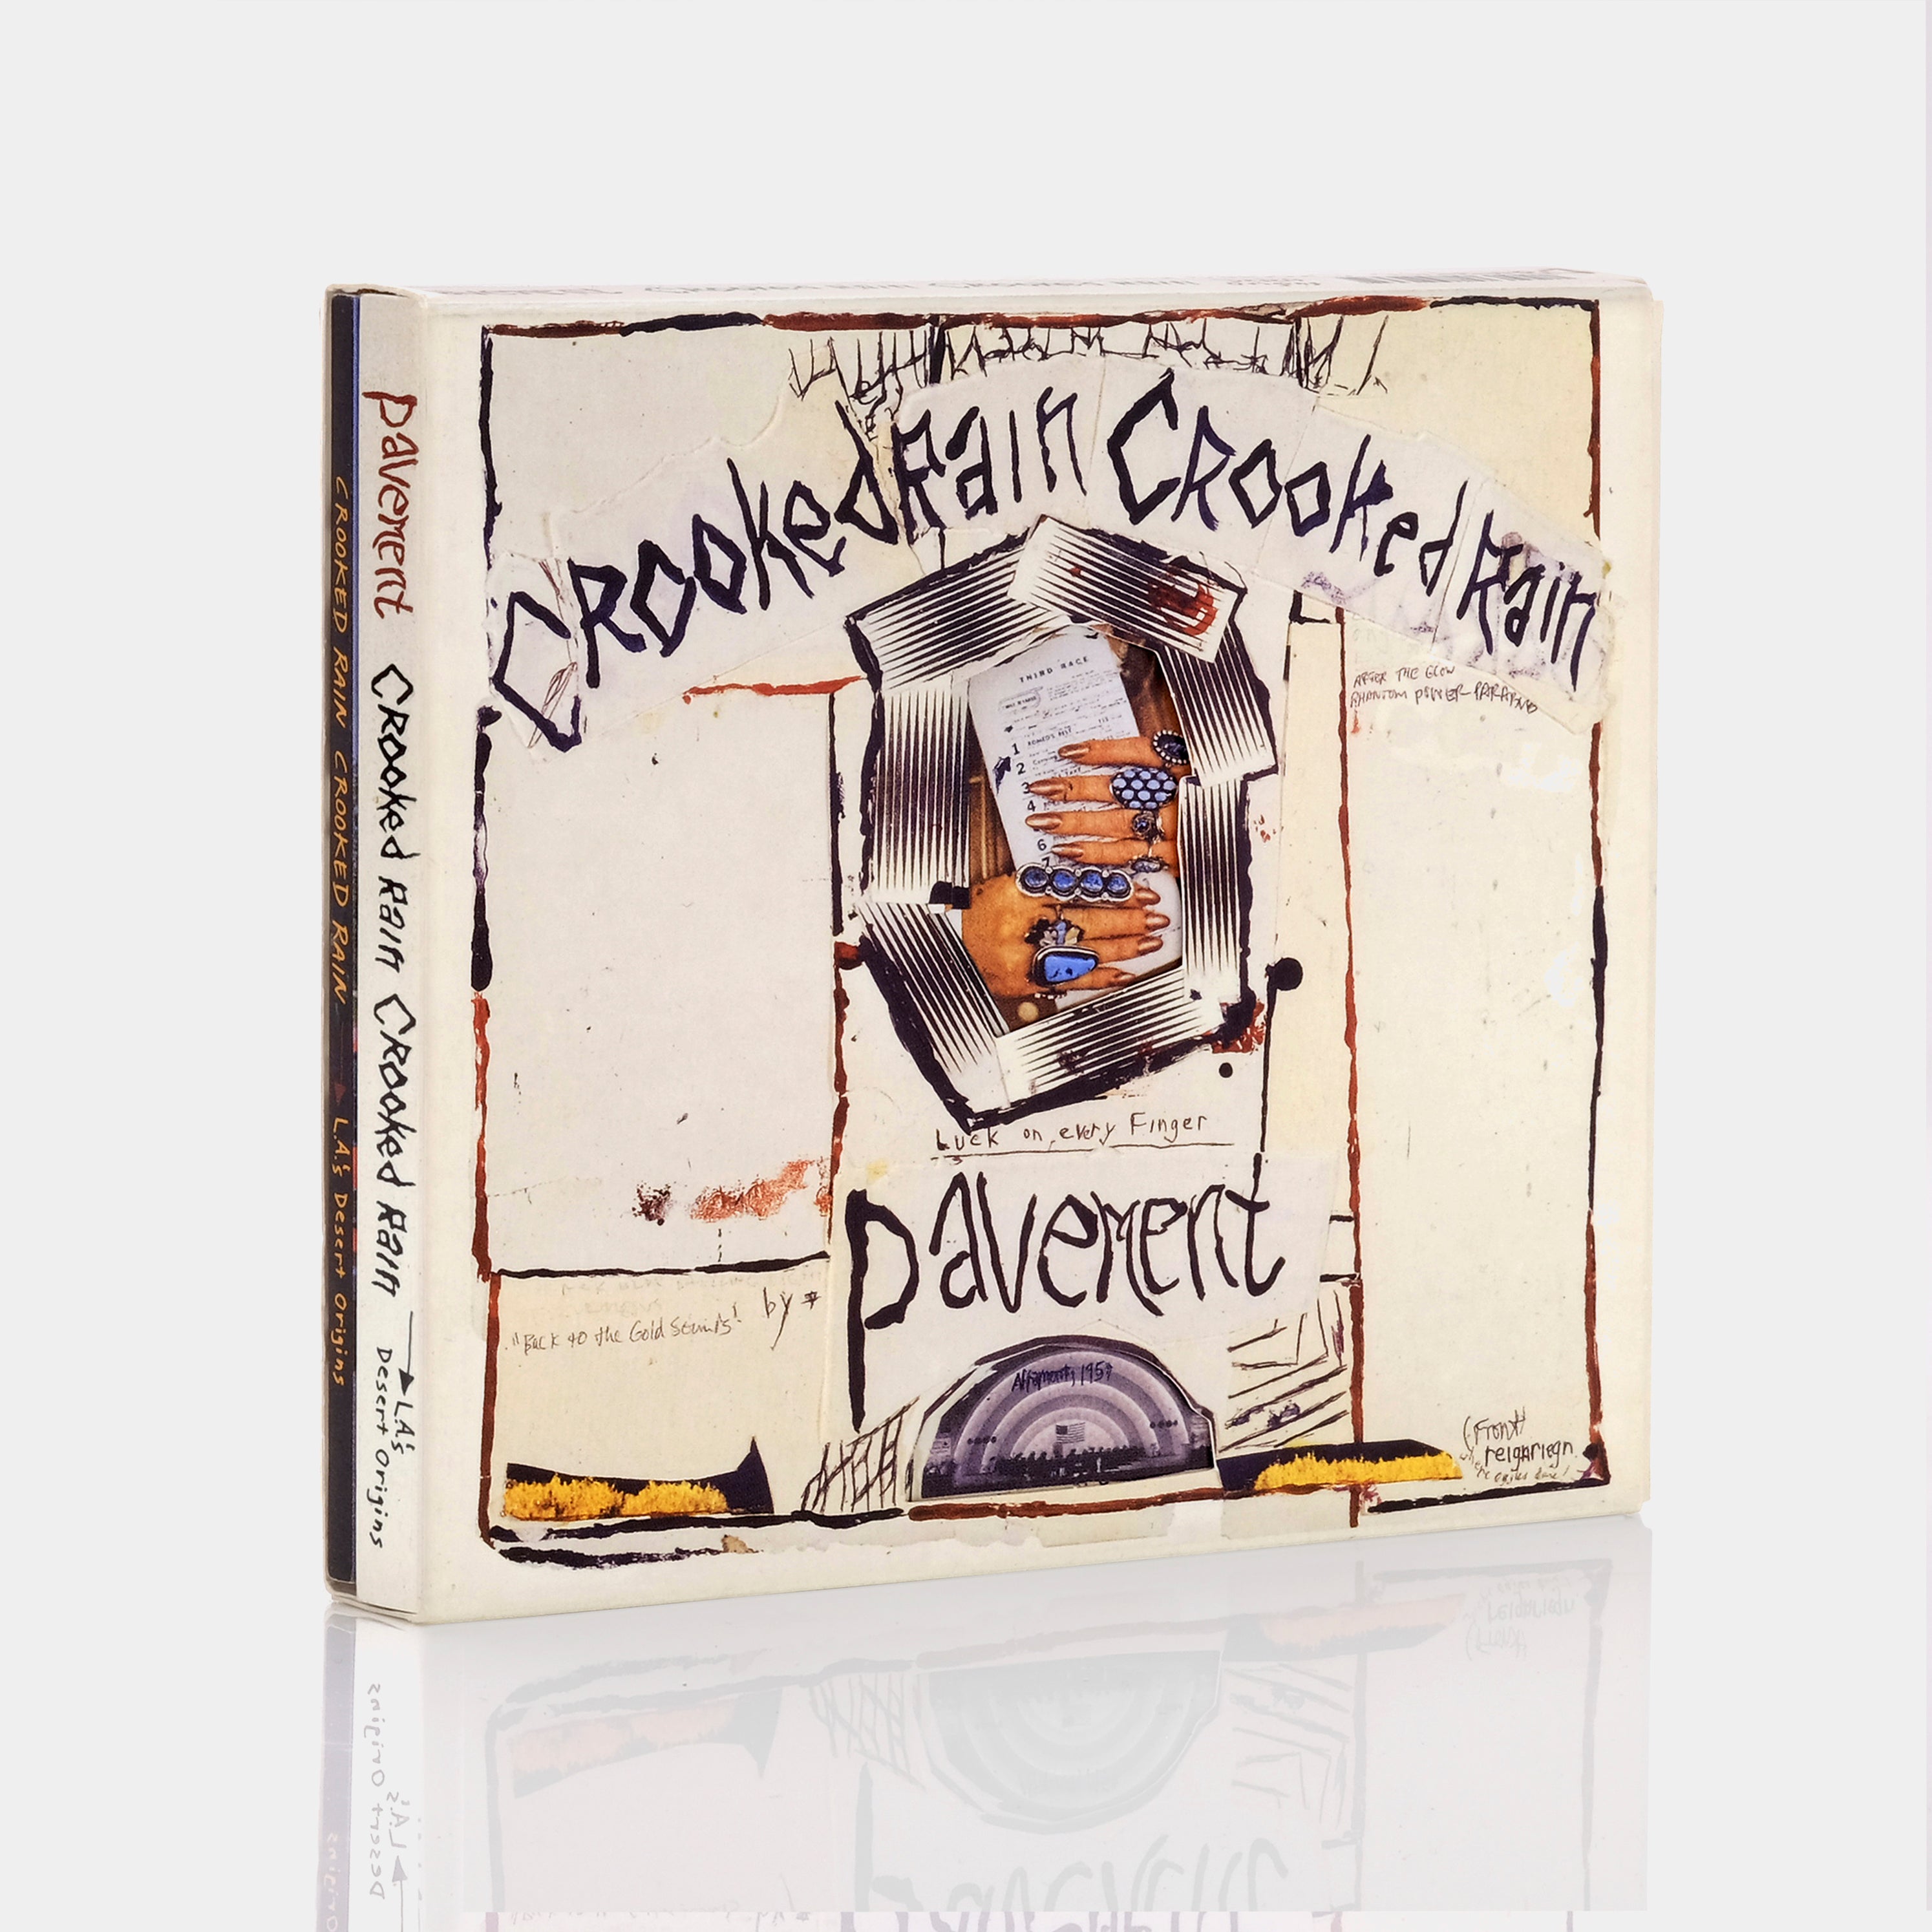 Pavement - Crooked Rain, Crooked Rain CD